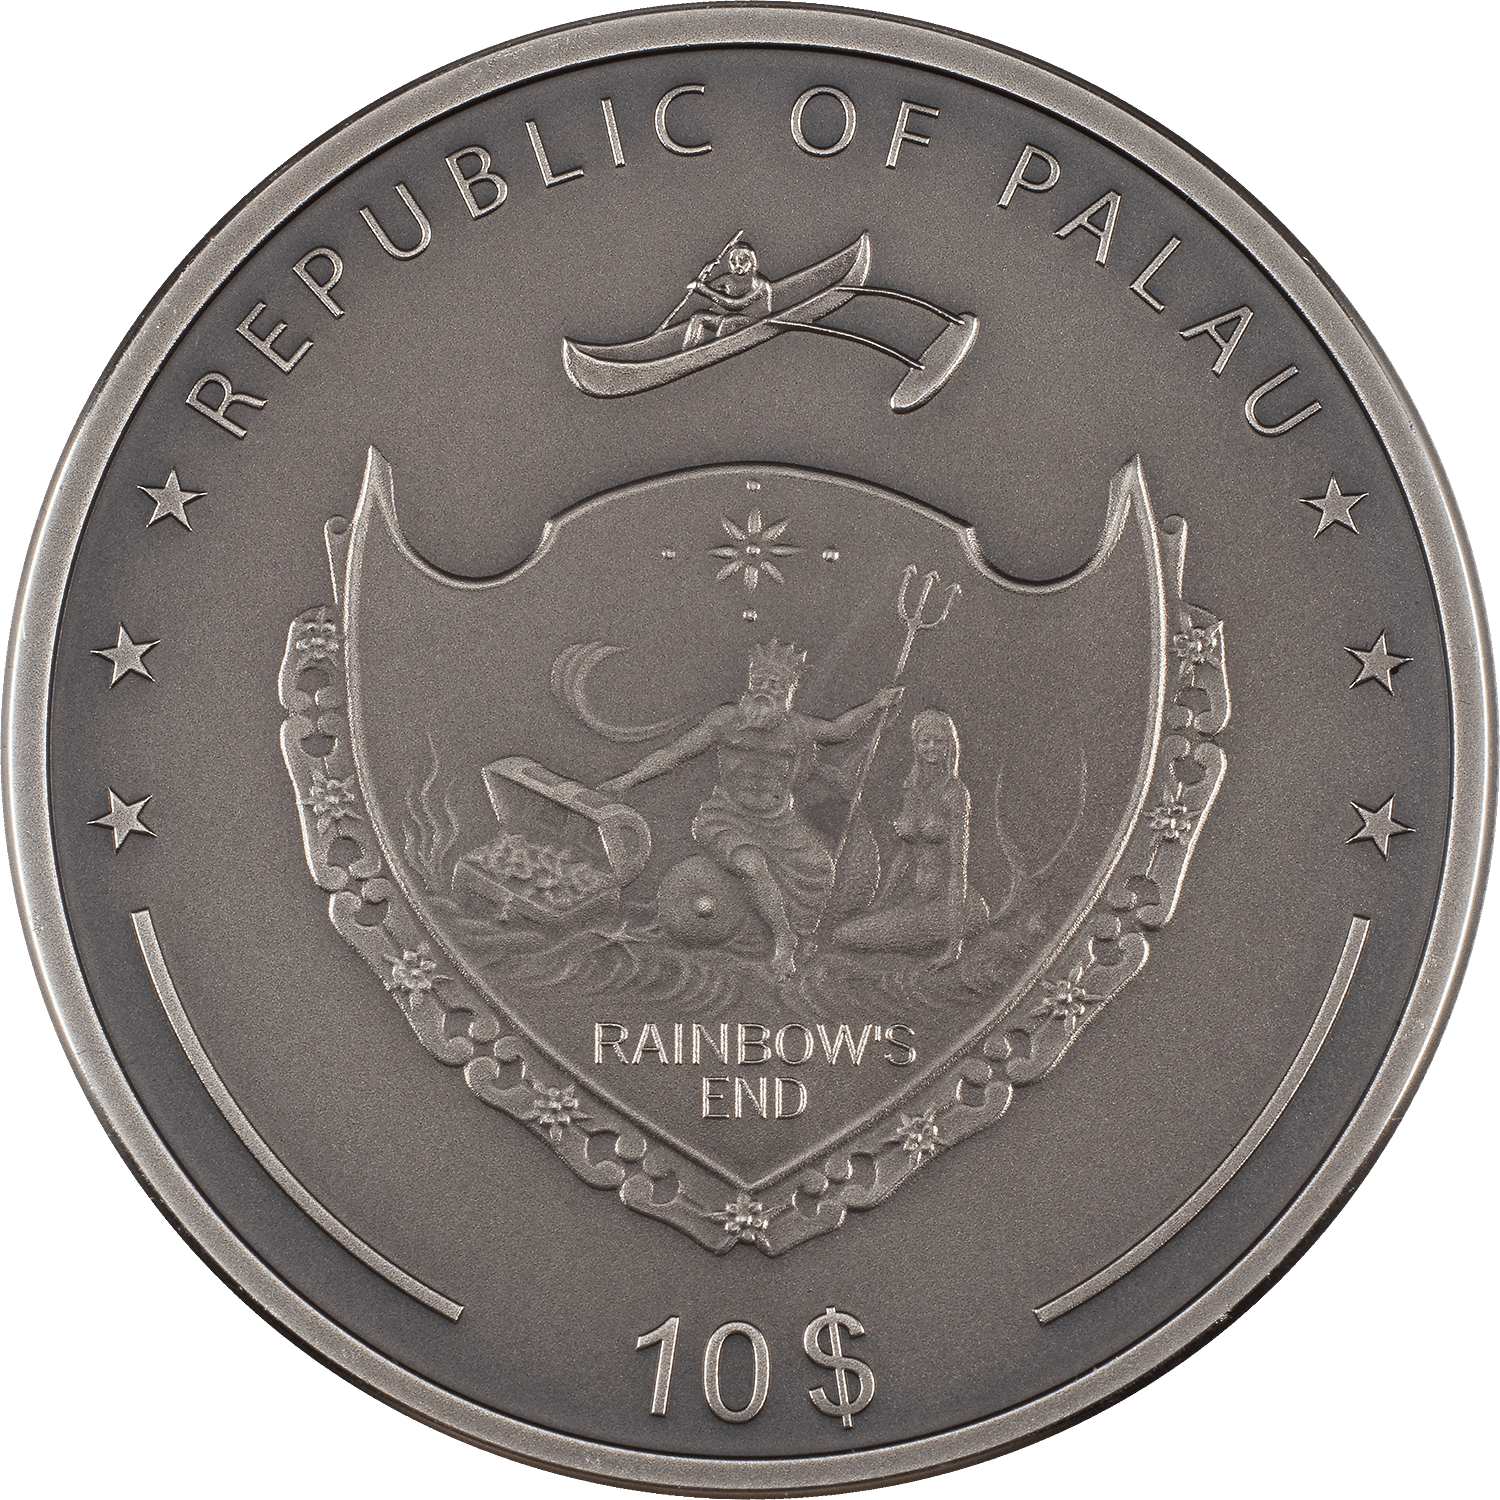 DAYDREAMER FUTURE 2 Oz Silver Coin $10 Palau 2022 - PARTHAVA COIN